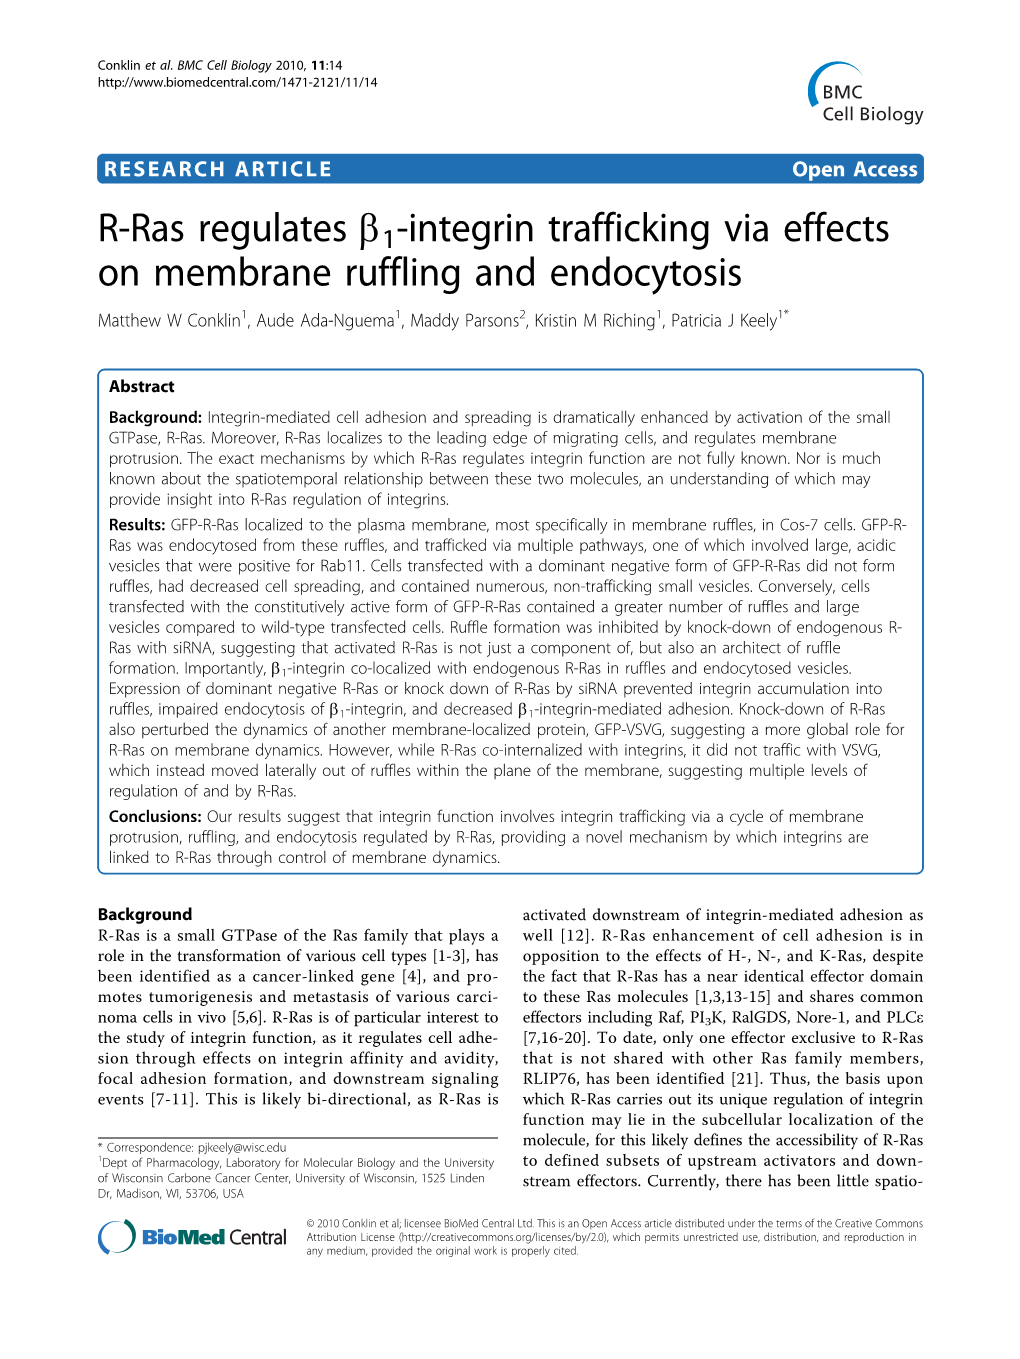 R-Ras Regulates B1-Integrin Trafficking Via Effects on Membrane Ruffling